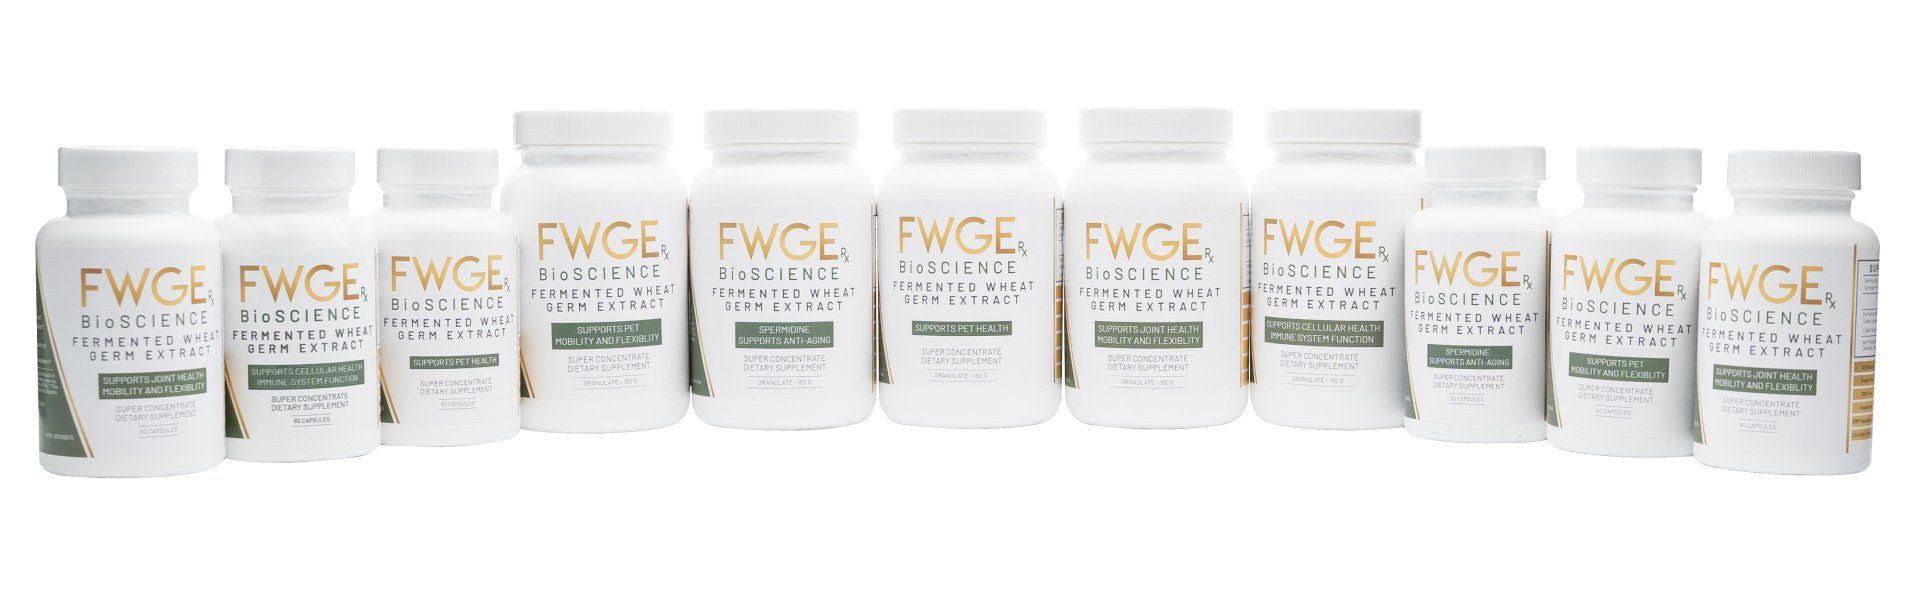 Effect of FWGE ® - a fermented wheat germ extract - on rheumatoid arthritis. Preliminary data